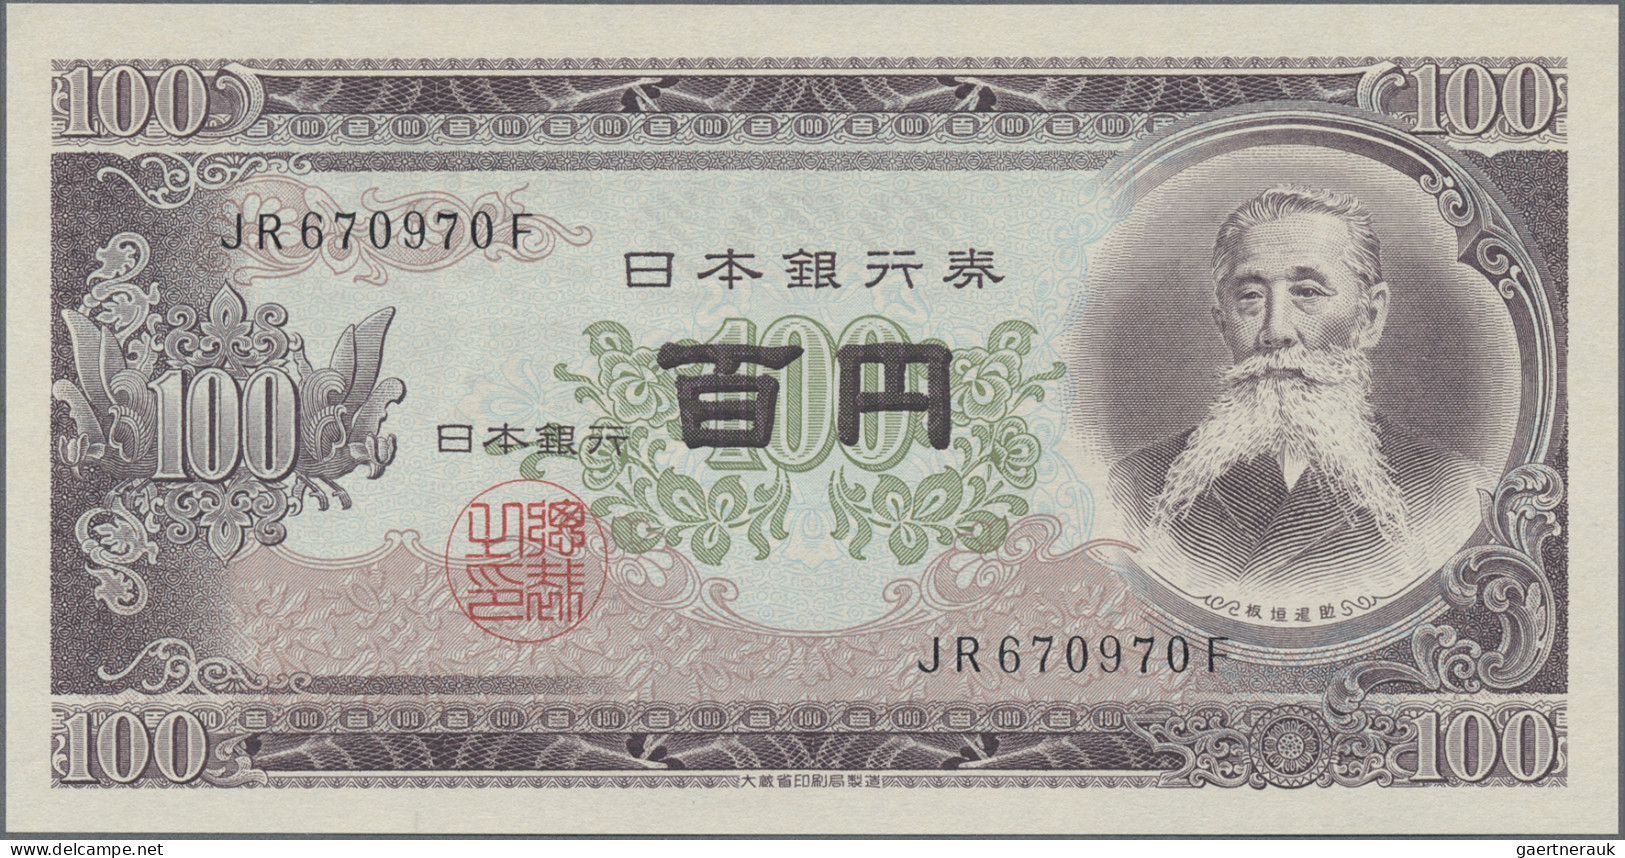 Japan: Bank of Japan, lot with 13 banknotes, series 1945-1955, comprising 50 Sen